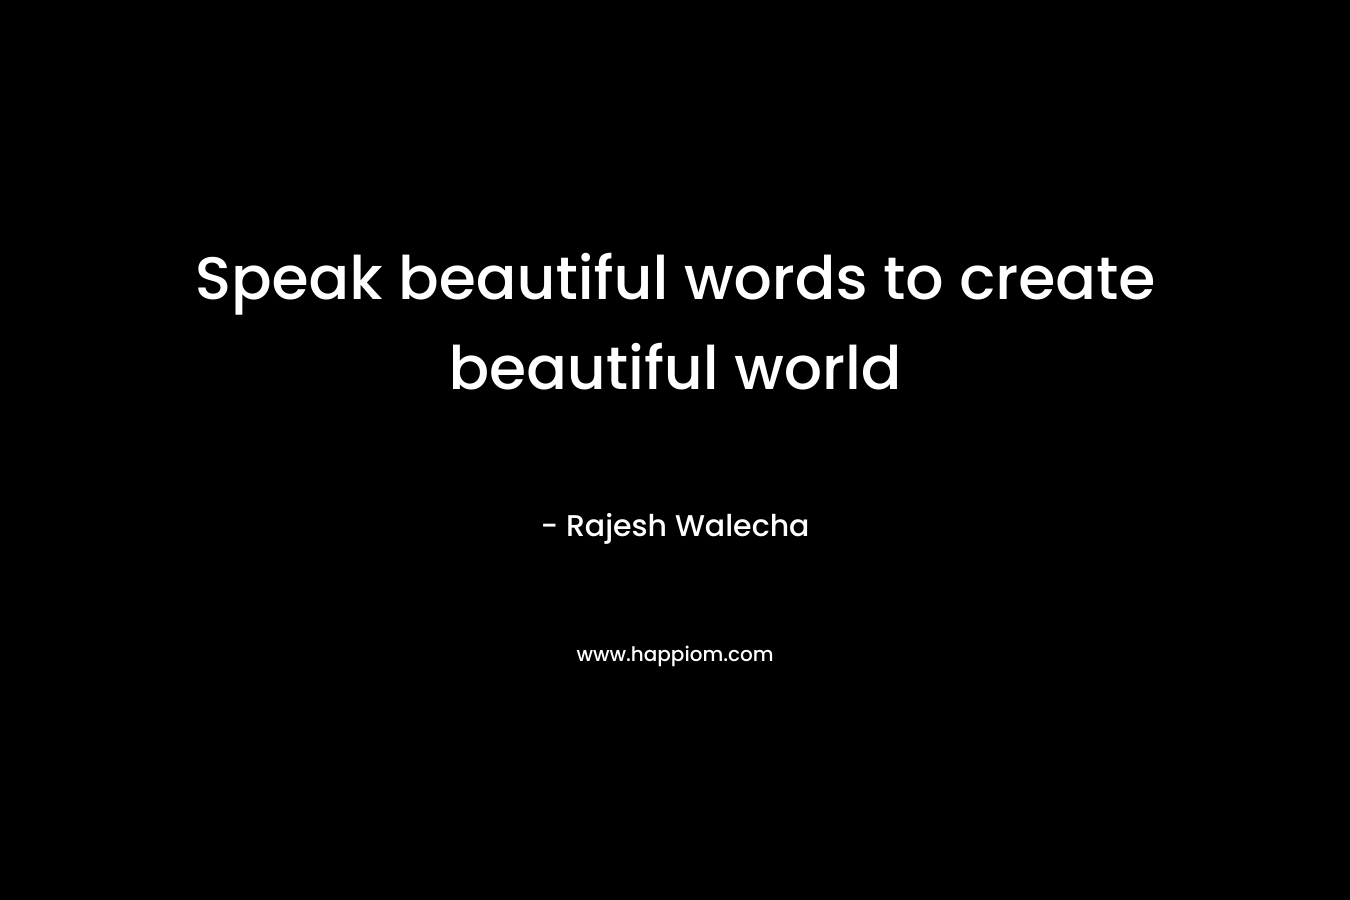 Speak beautiful words to create beautiful world